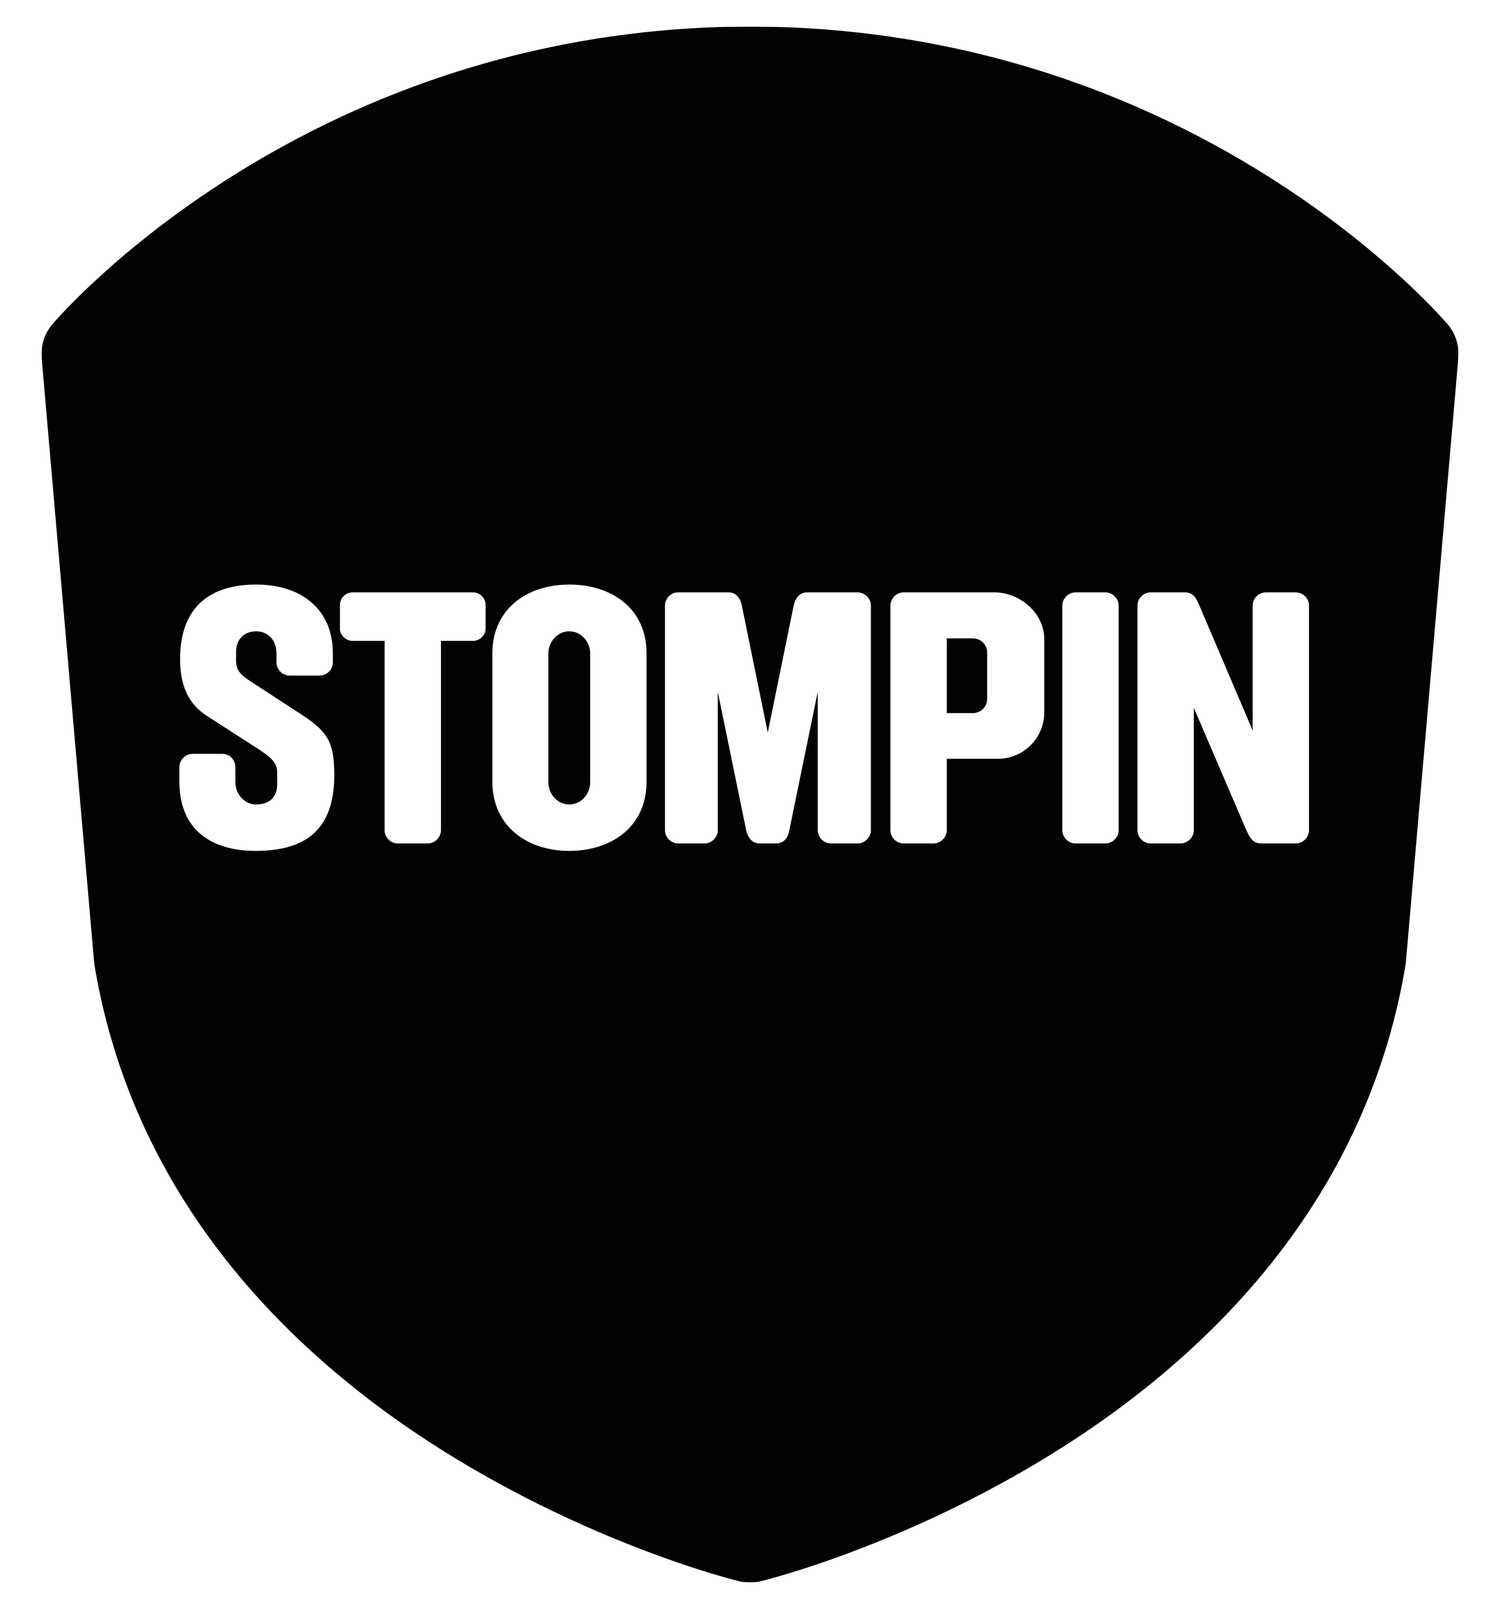 Stompin